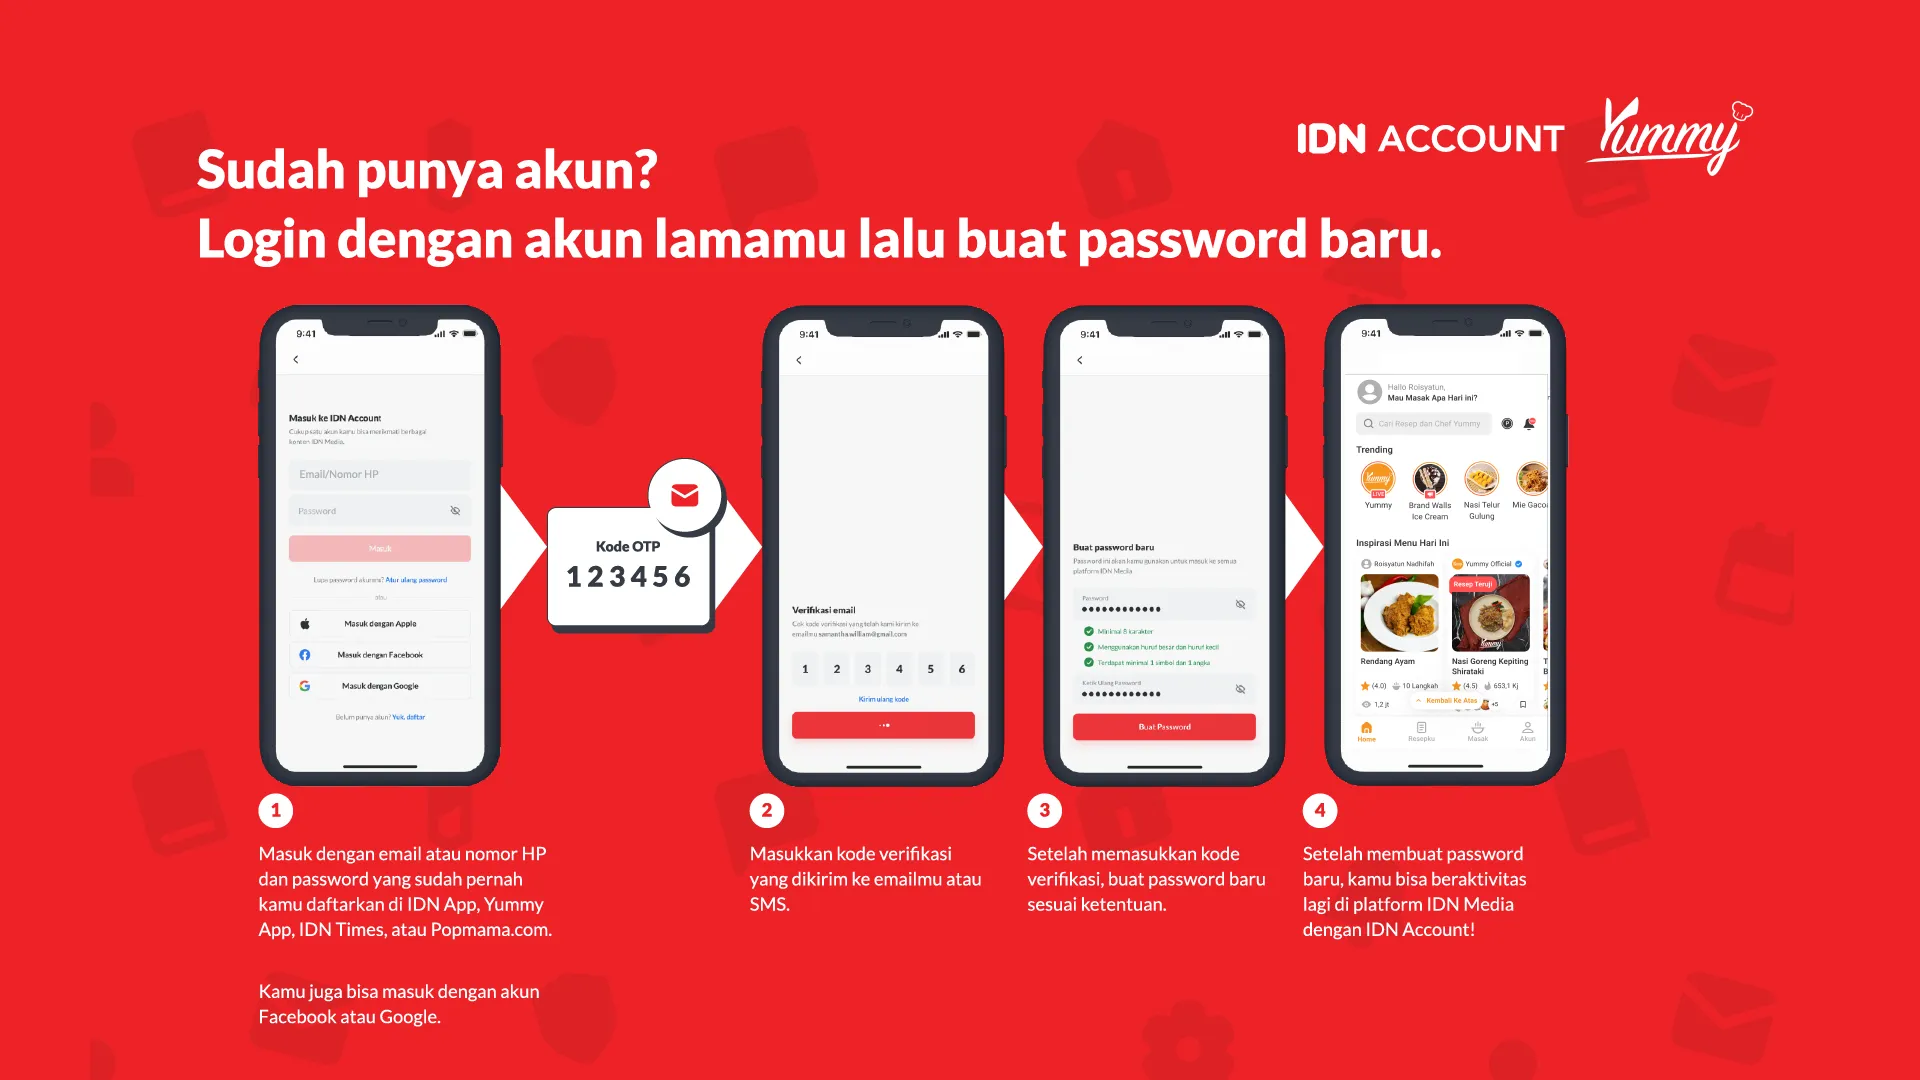 Sebelum masuk IDN Account, ganti password dulu yuk!